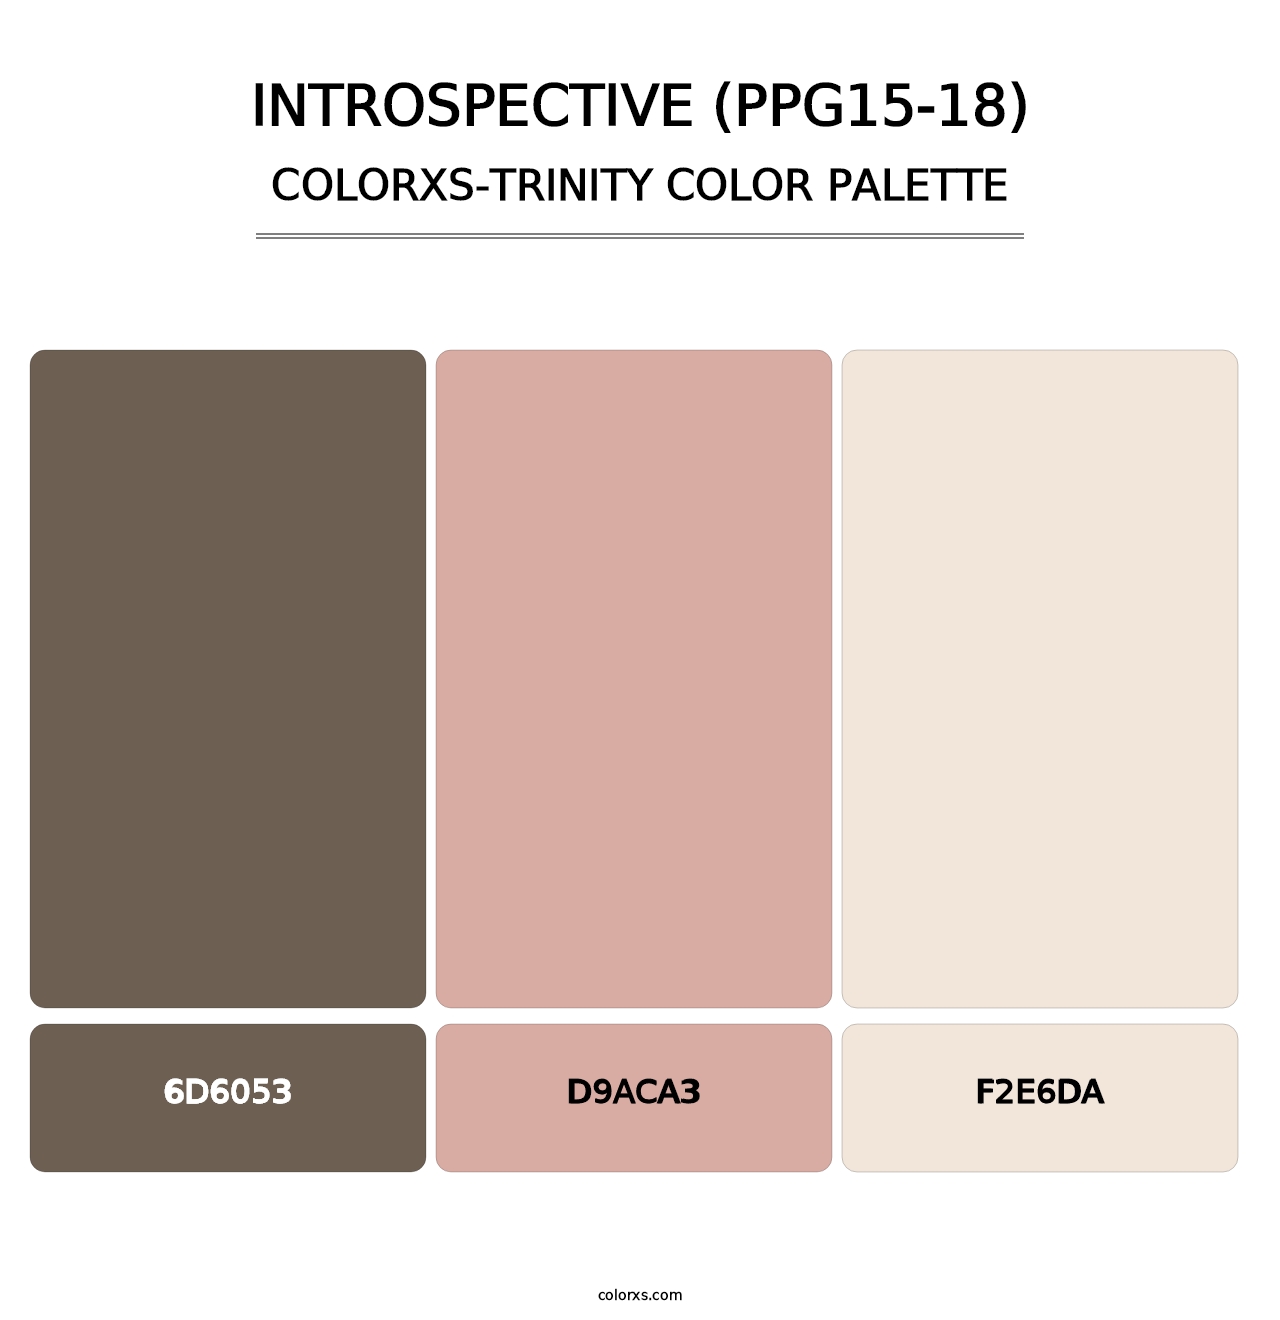 Introspective (PPG15-18) - Colorxs Trinity Palette